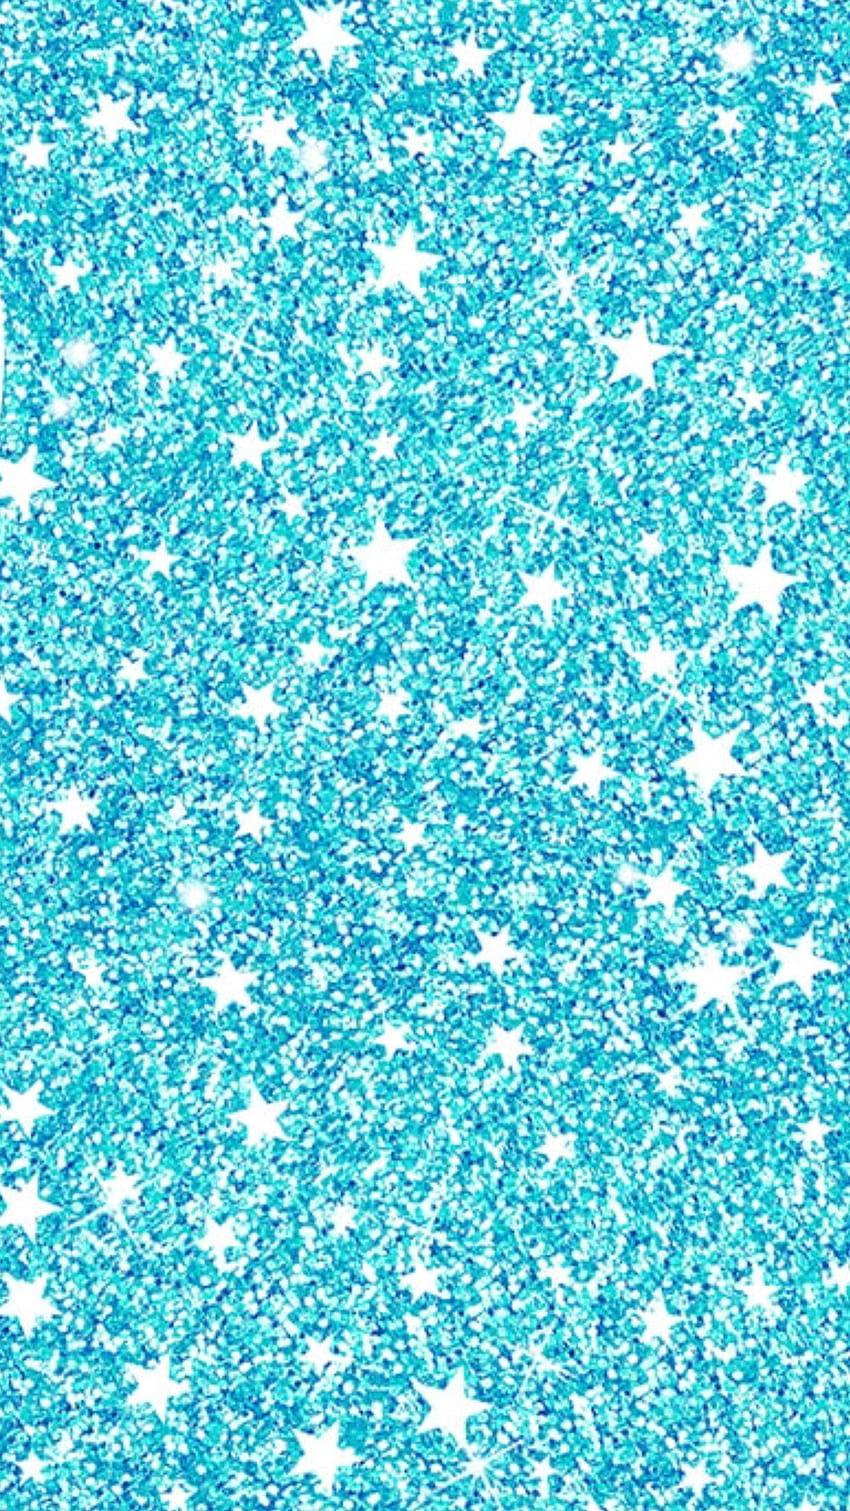 Blue Glitter Background Images  Free Download on Freepik